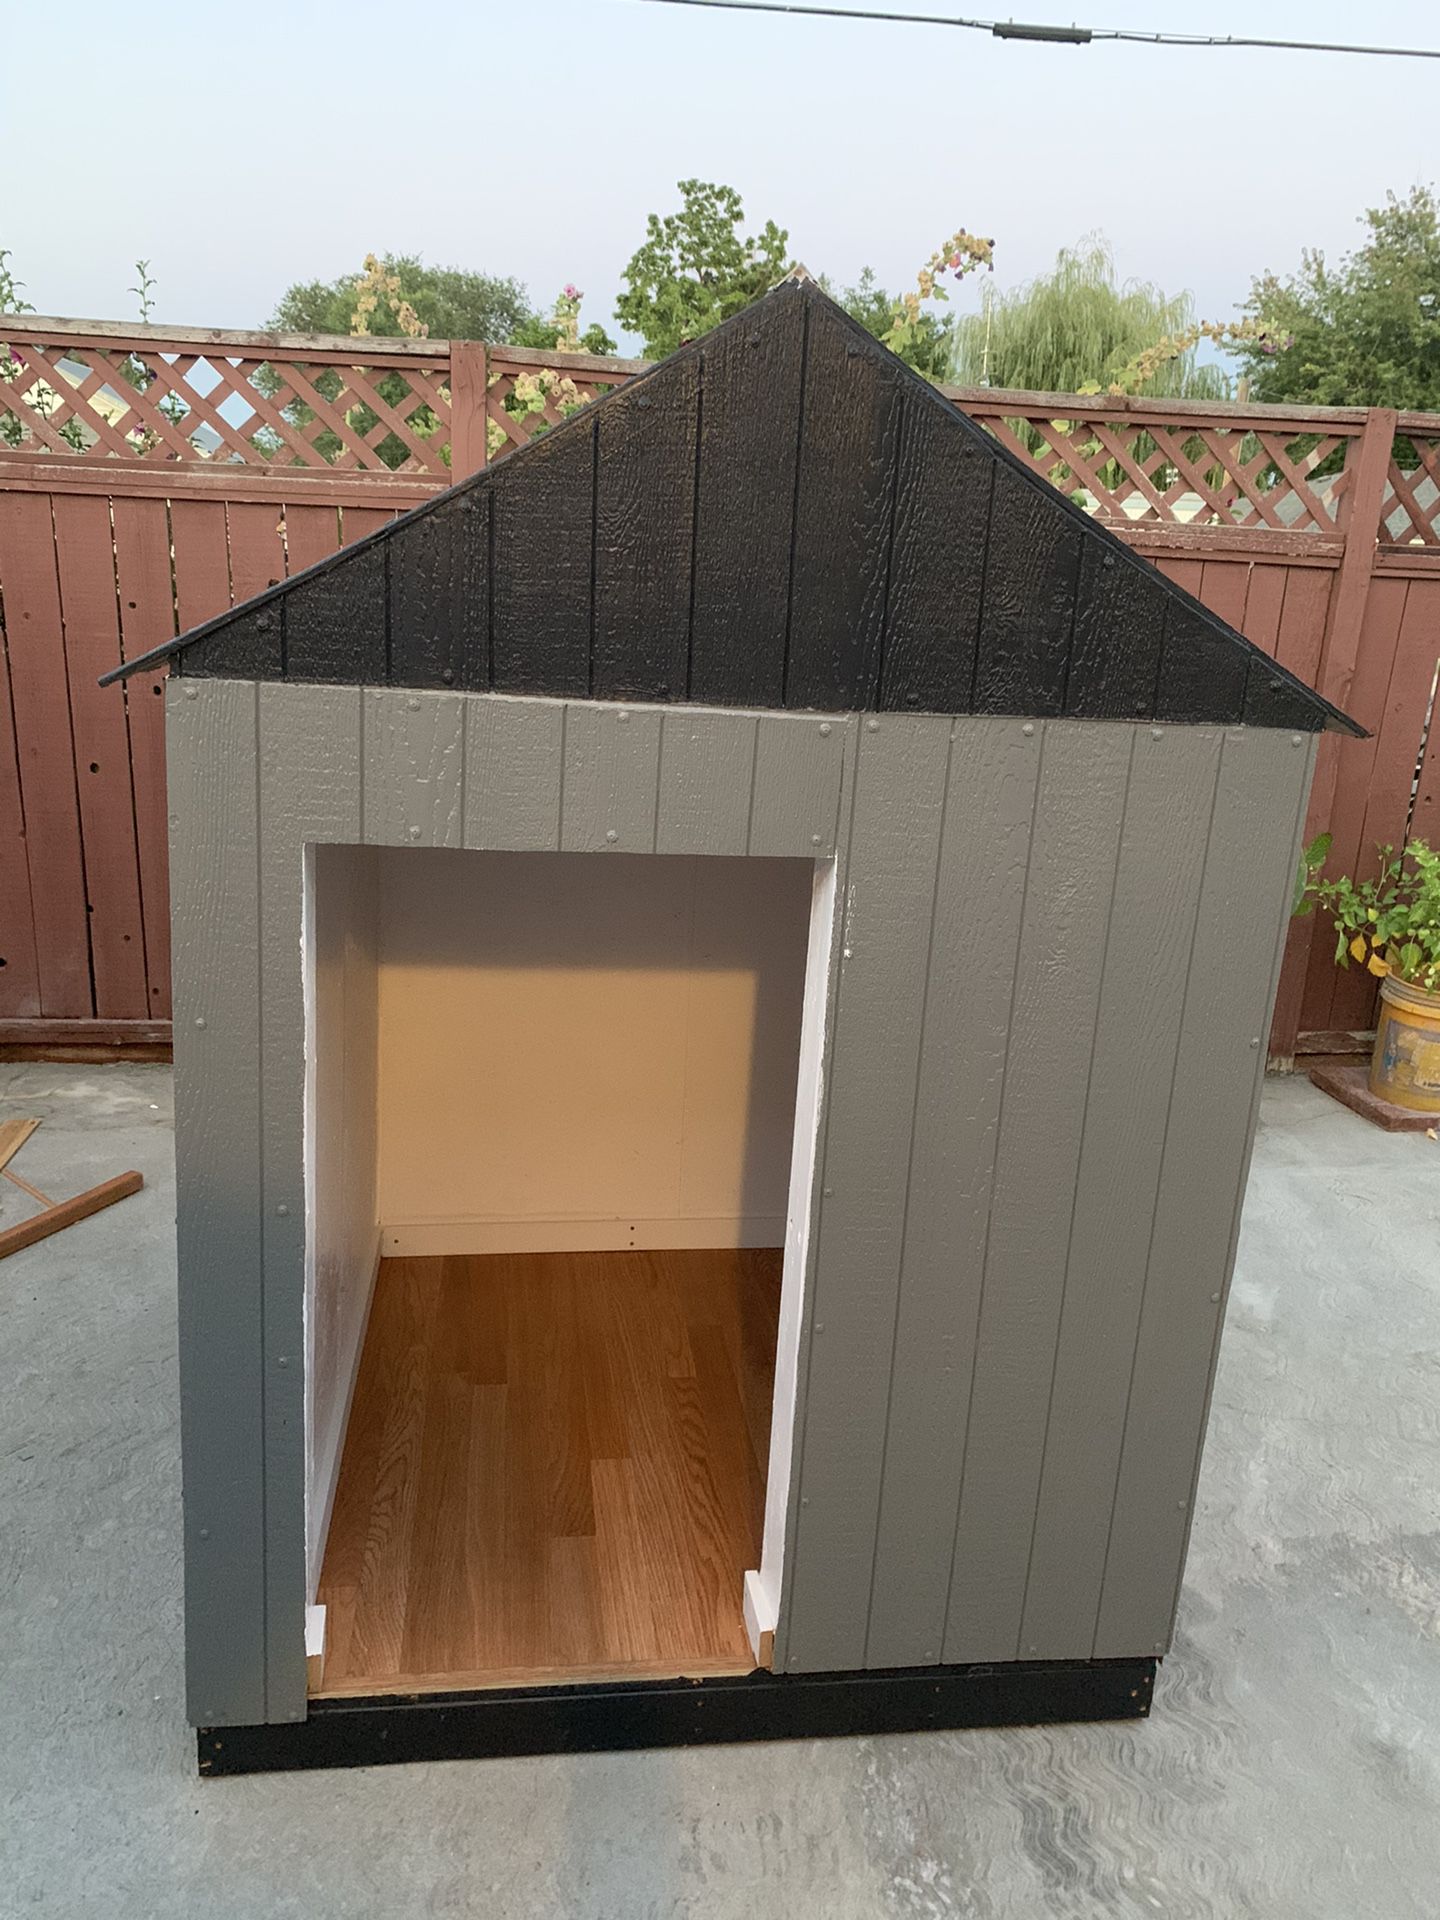 I build dog houses